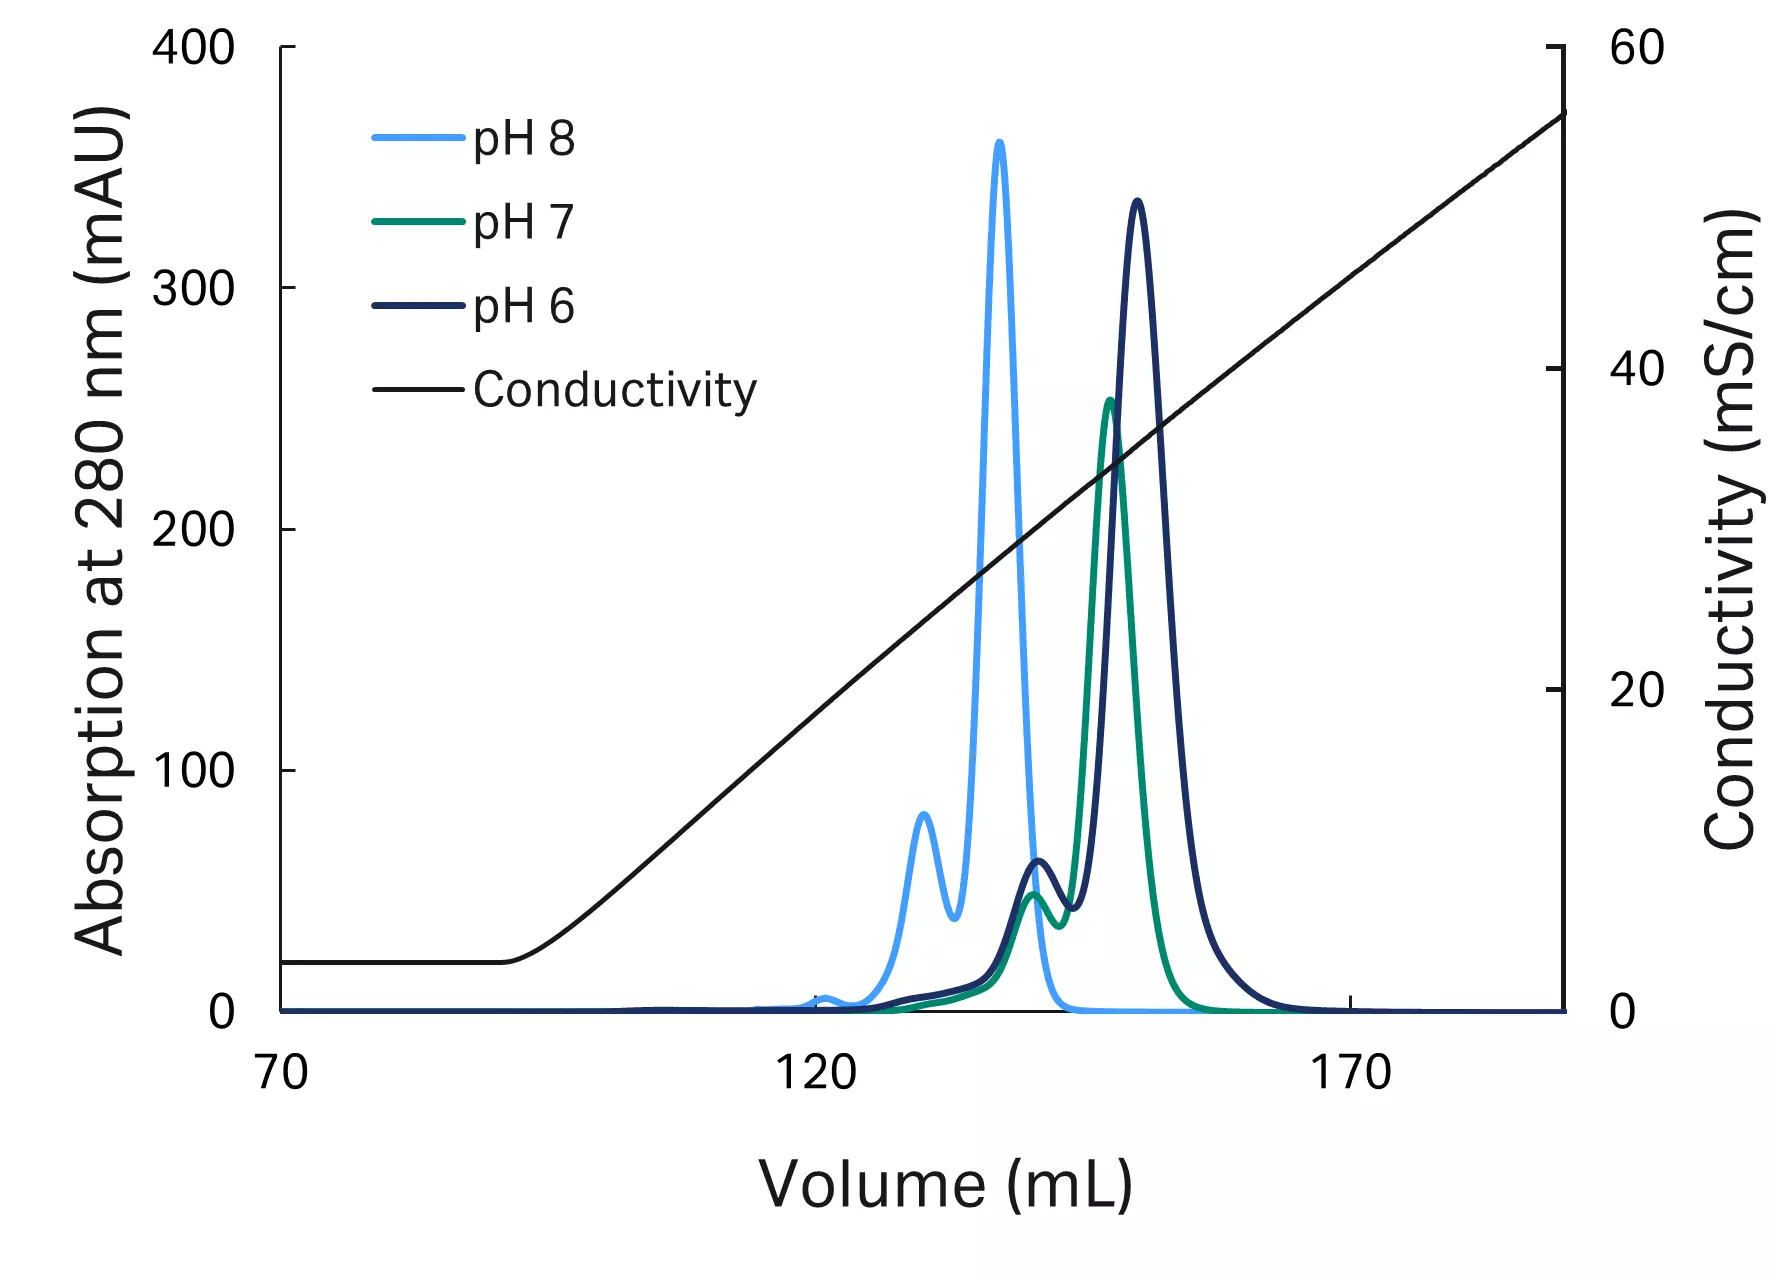 Figure 1: Process pH screening with linear gradient elution